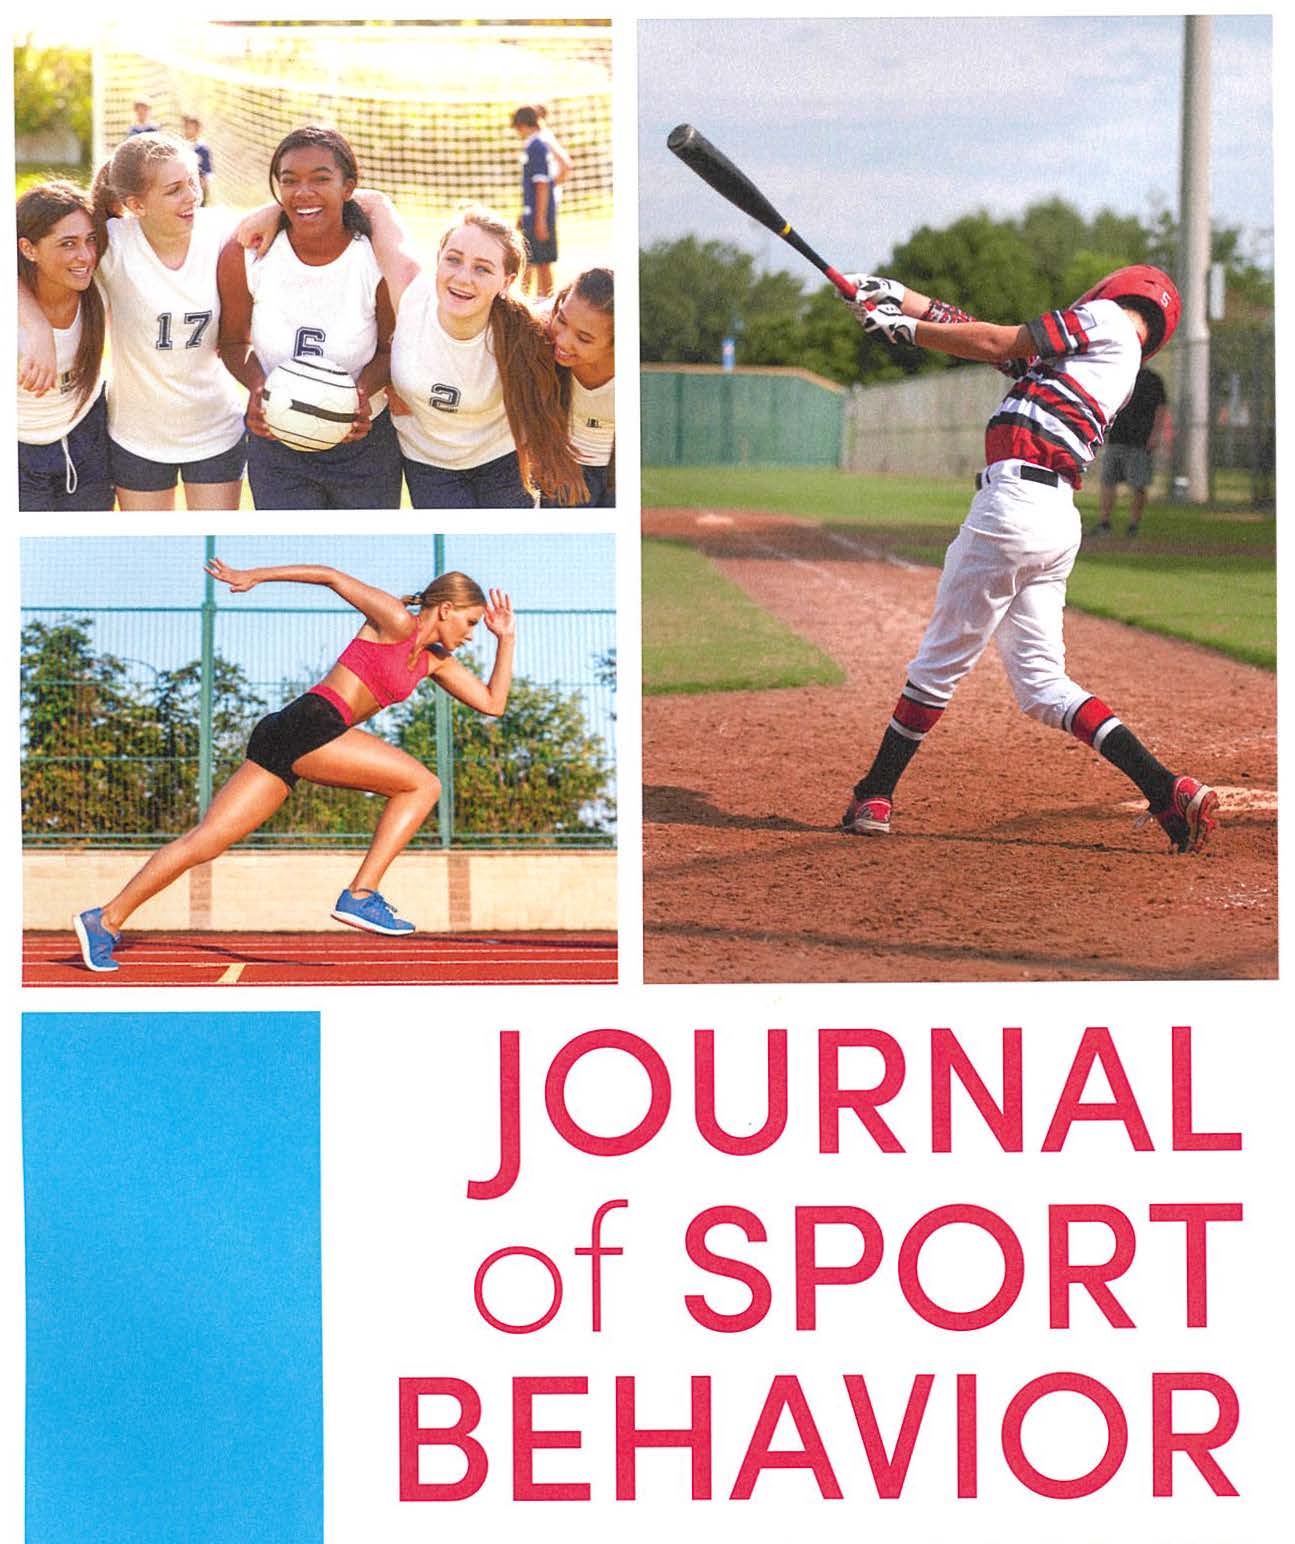 					View Vol. 44 No. 1 (2021): Journal of Sport Behavior
				